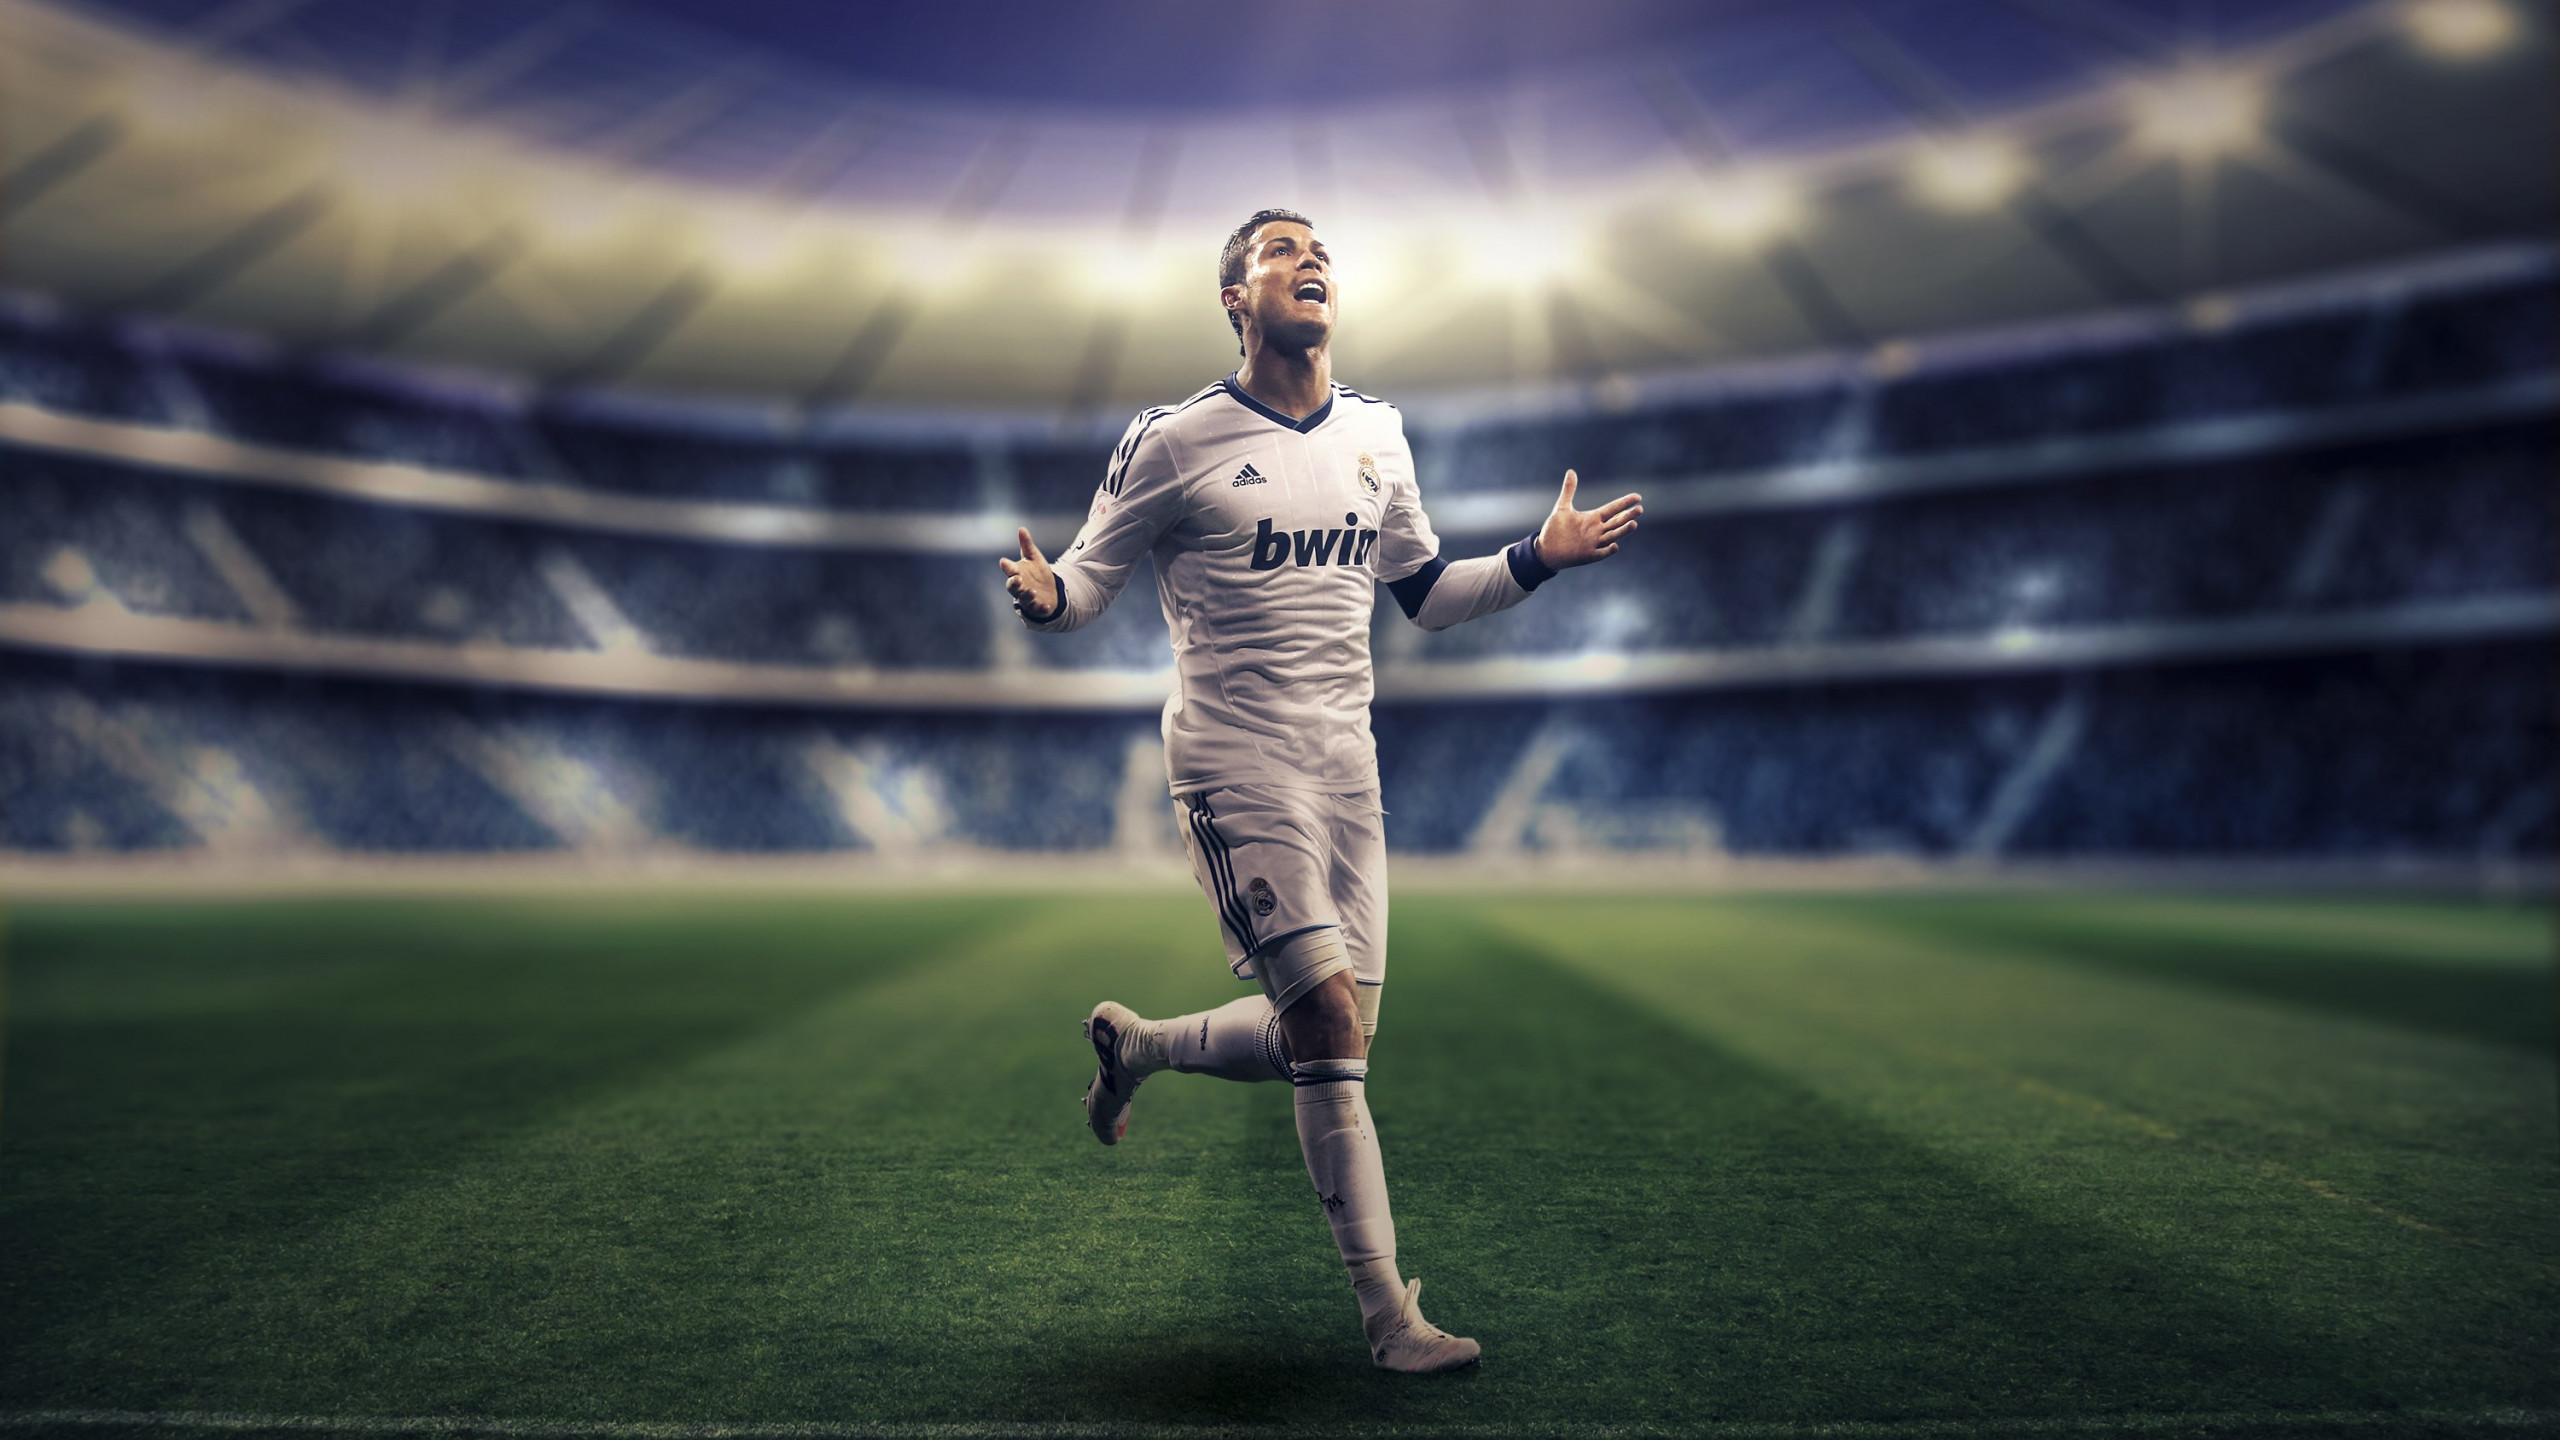 Cristiano Ronaldo for Real Madrid wallpaper 2560x1440